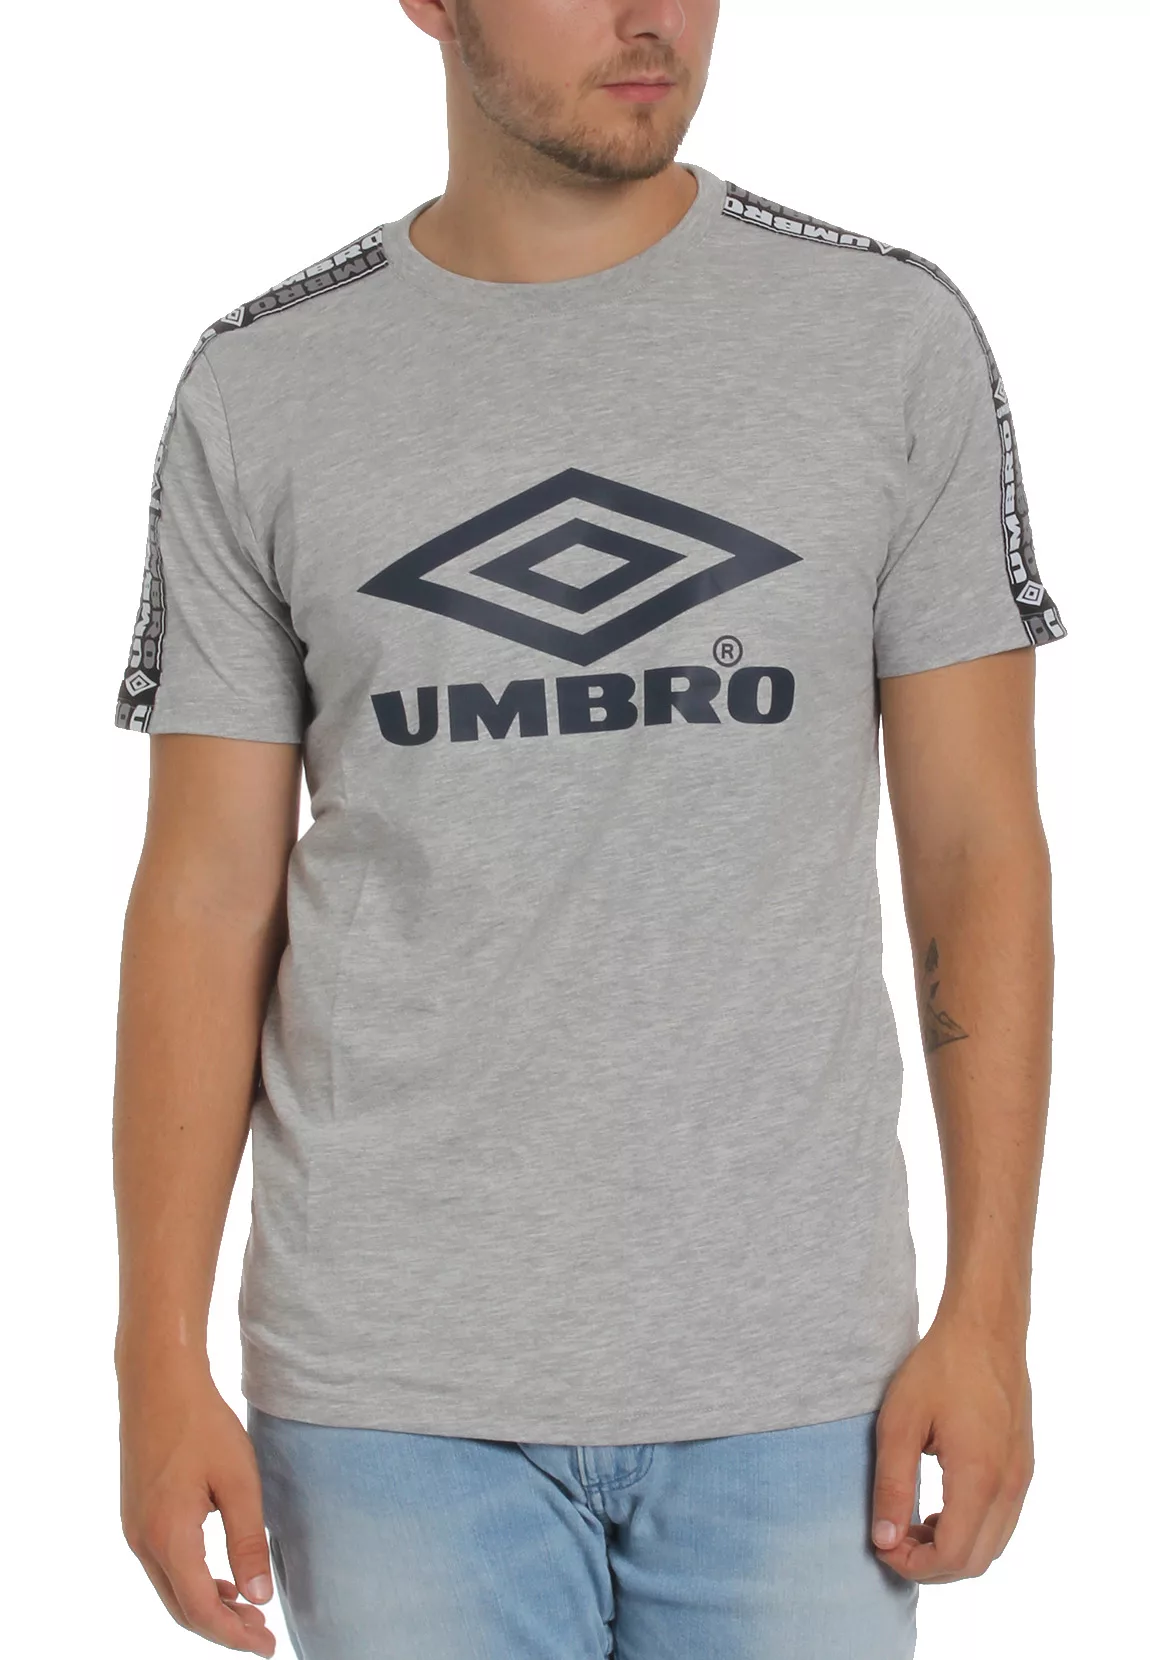 Umbro T-Shirt Herren TAPED CREW TEE UMTM0234 263 Grau Grey Marl günstig online kaufen